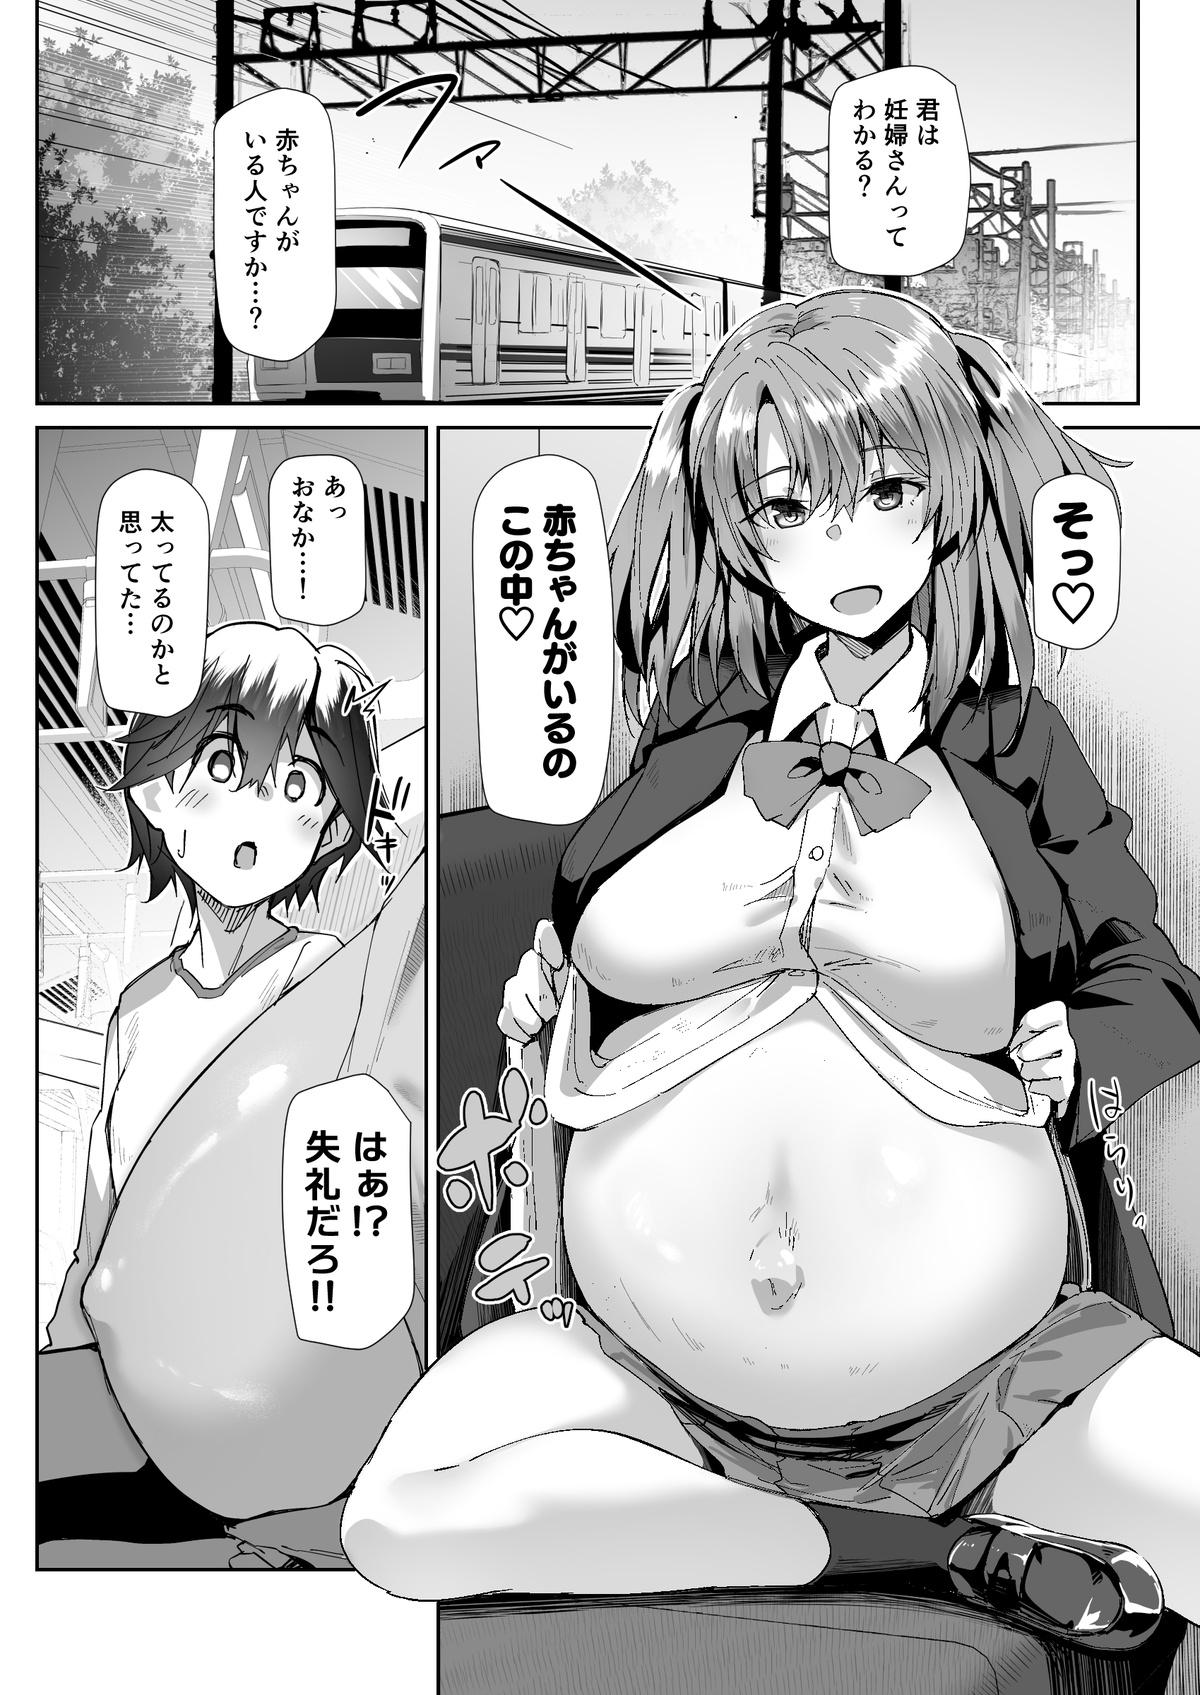 Pregnant hentai2read